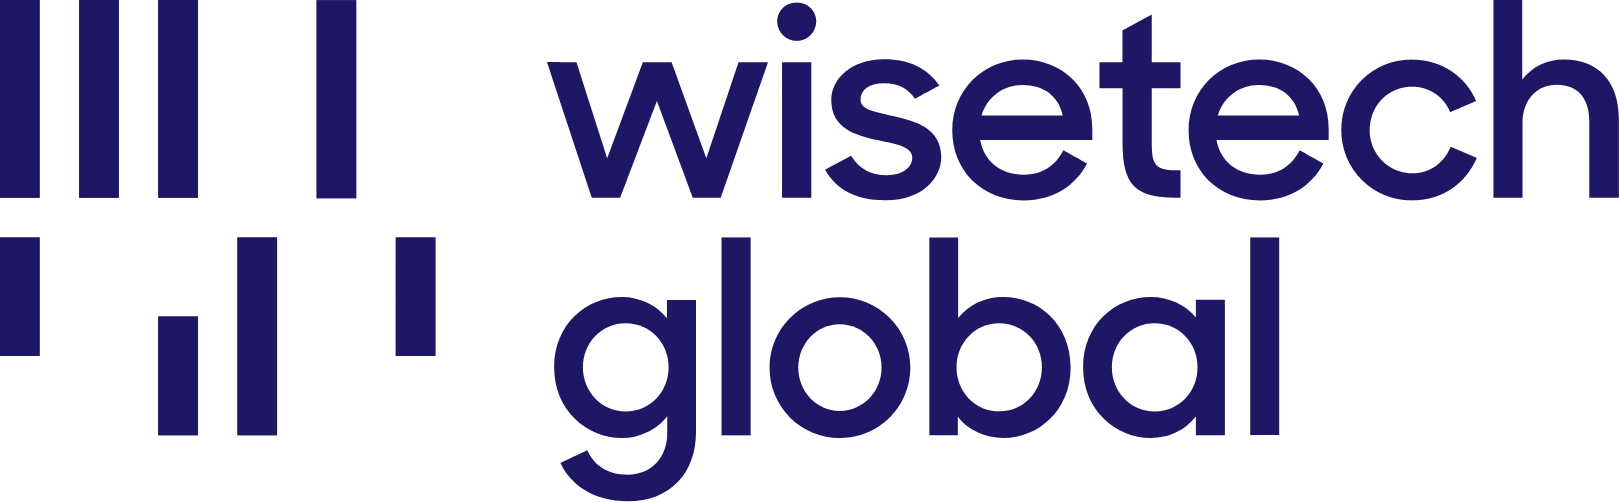 WiseTech Global
 logo large (transparent PNG)